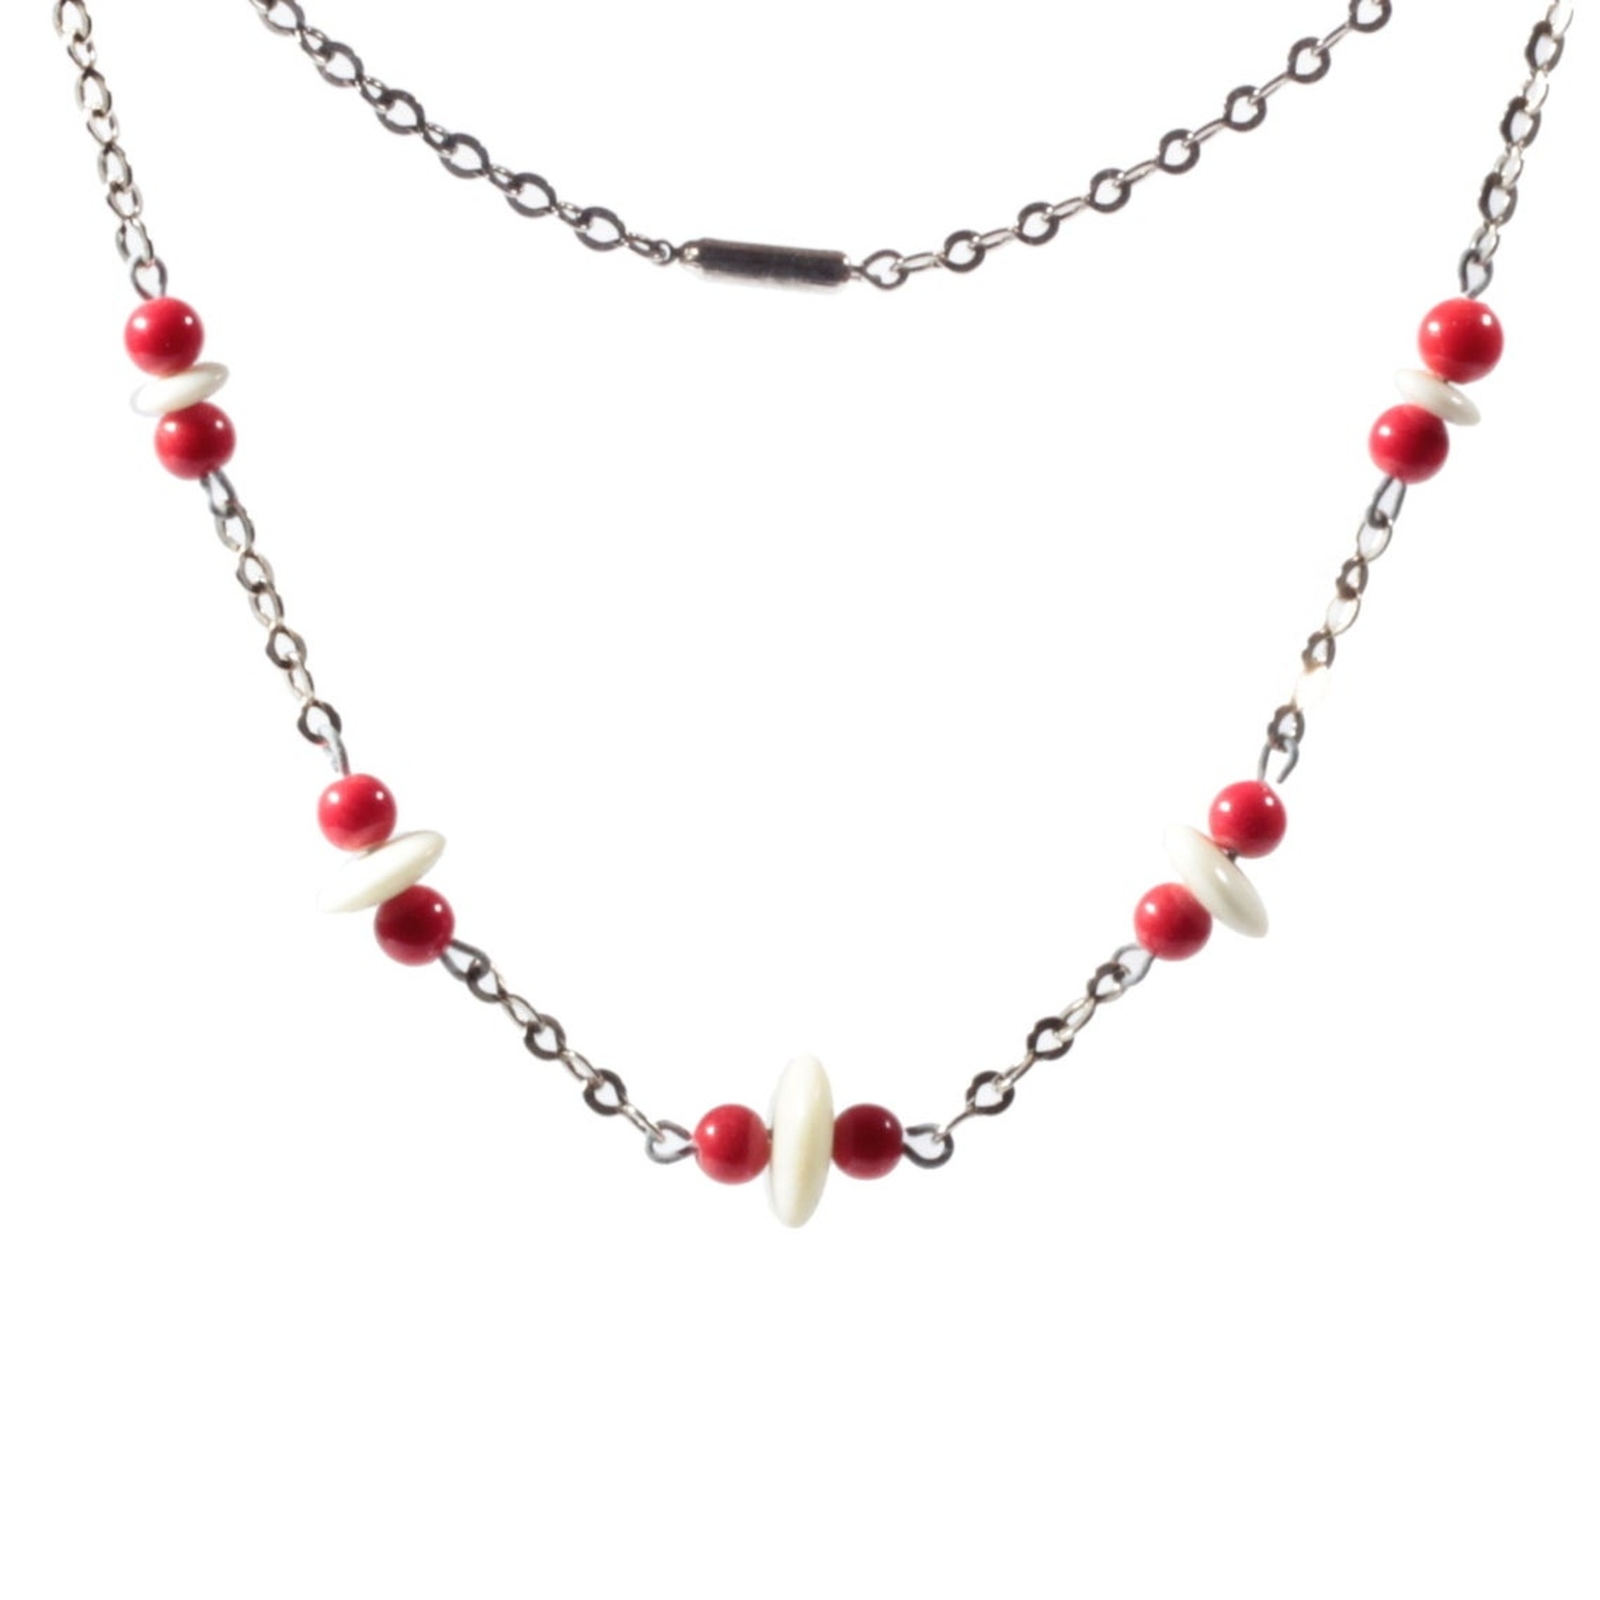 Vintage Art Deco chrome chain necklace Czech Uranium rondelle red round glass beads